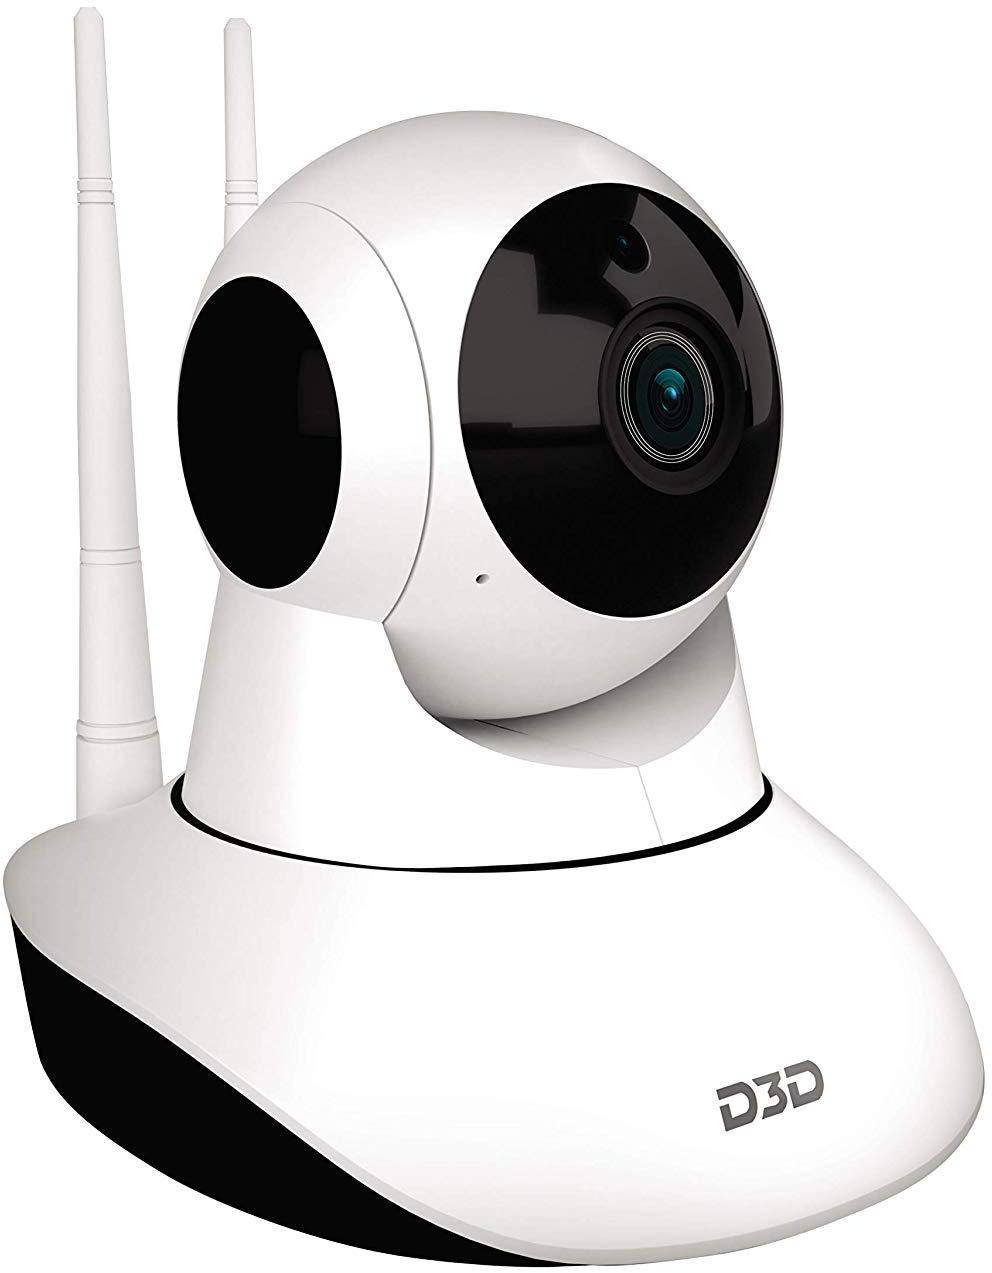 D3D 1080P WiFi Security Camera 360 PTZ zoom image